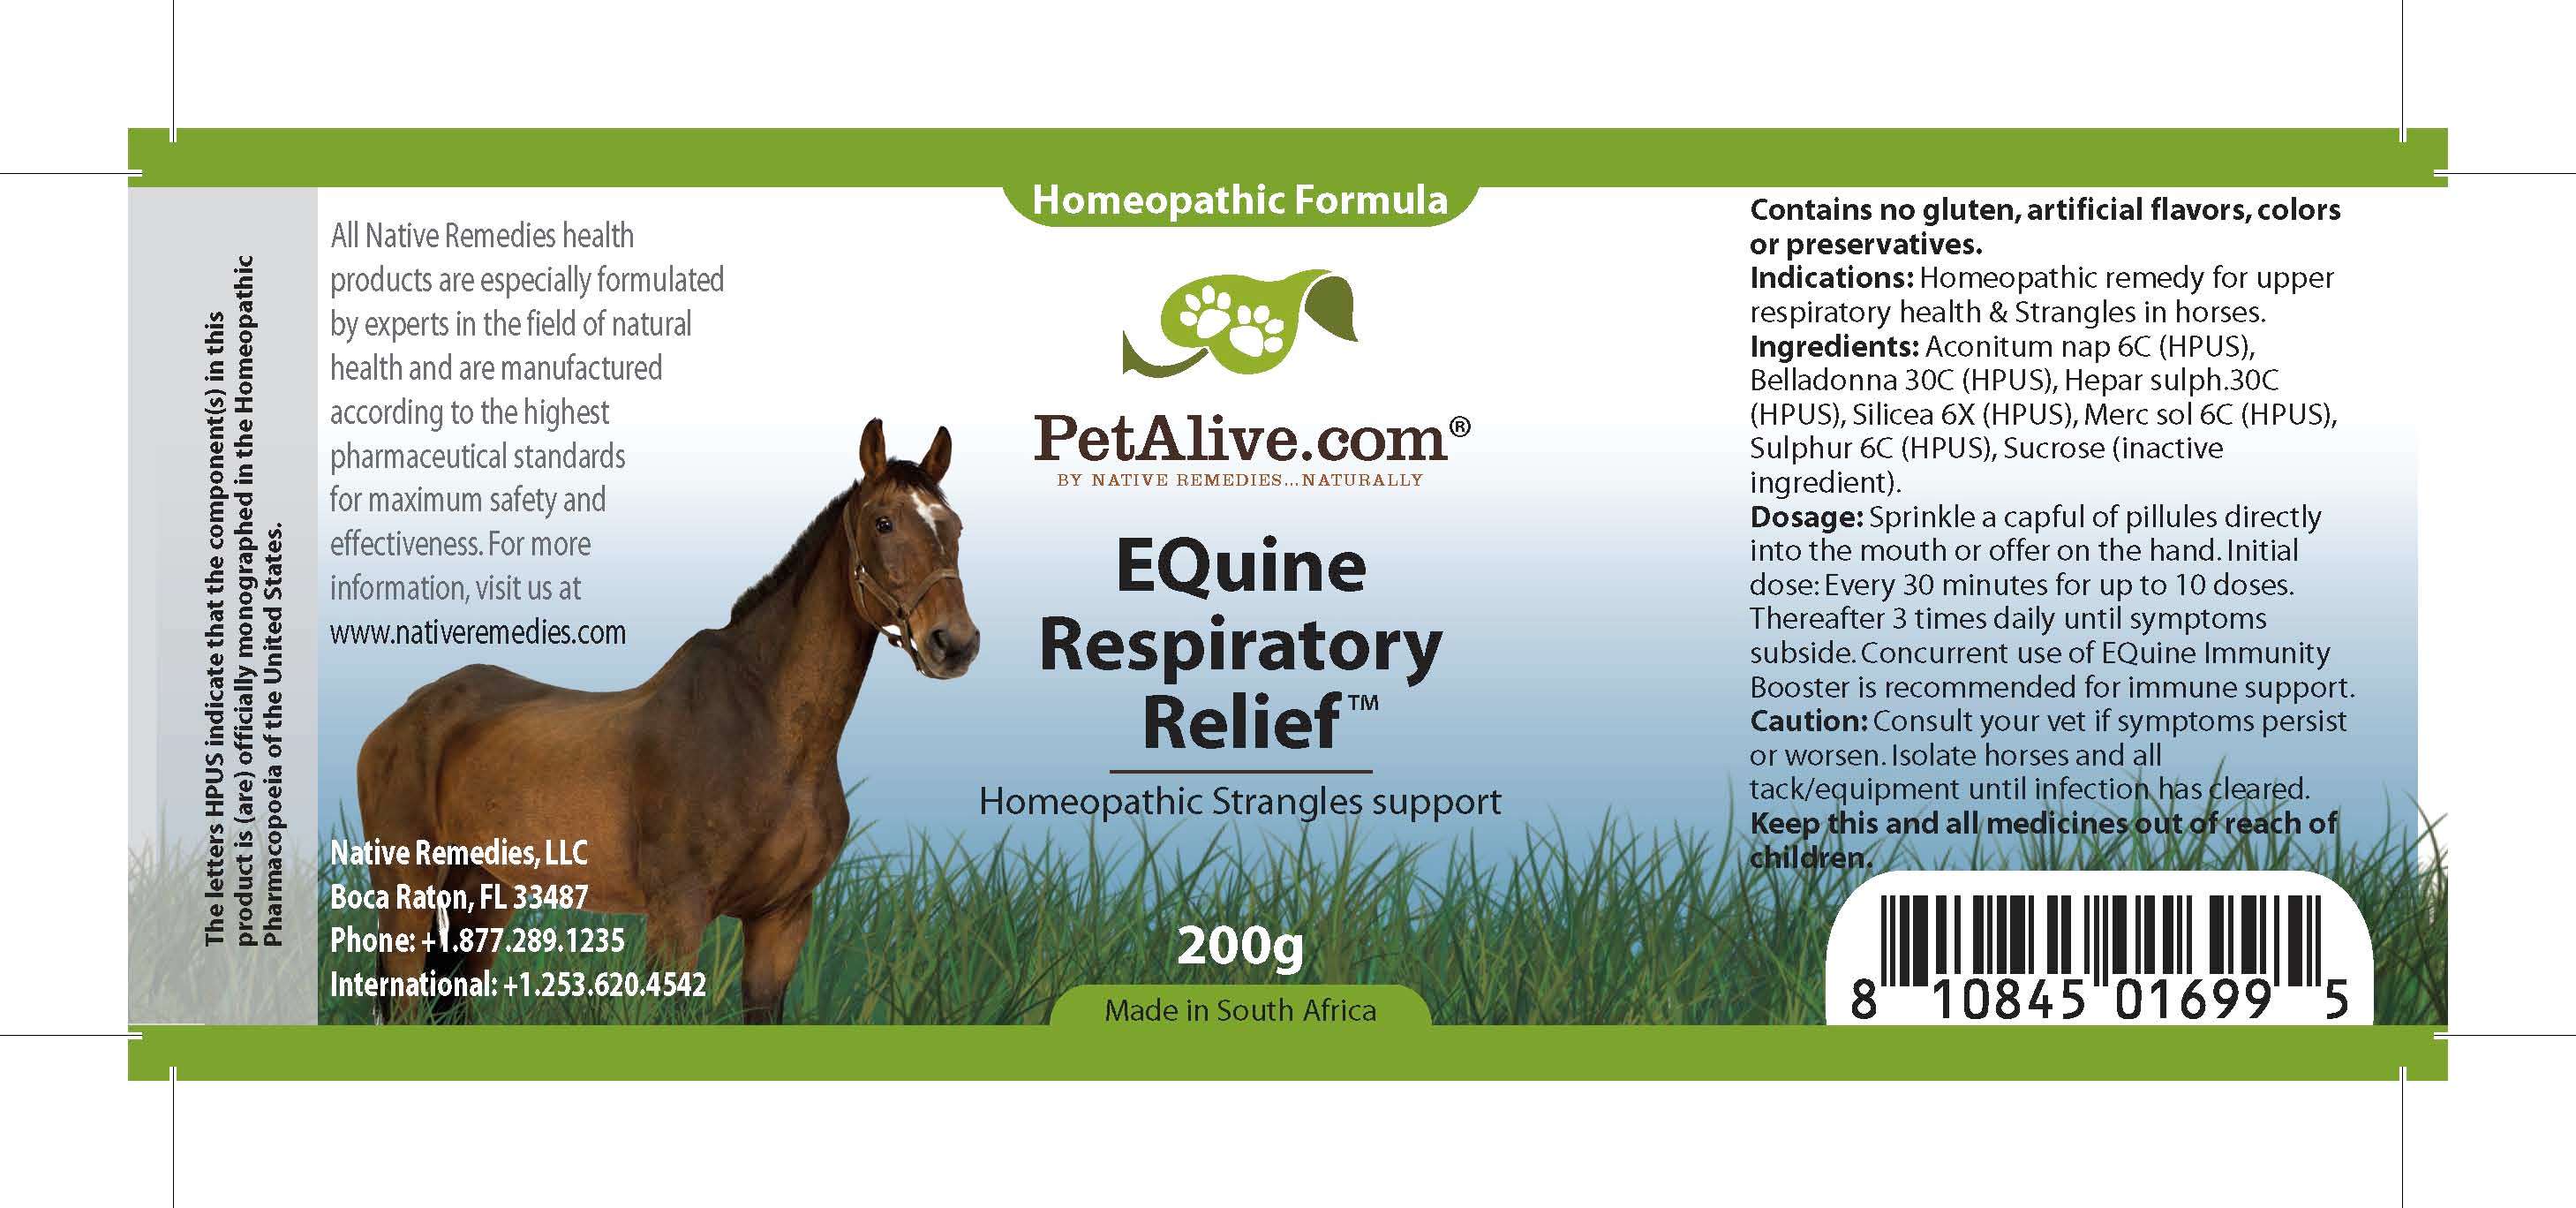 Equine Respiratory Relief